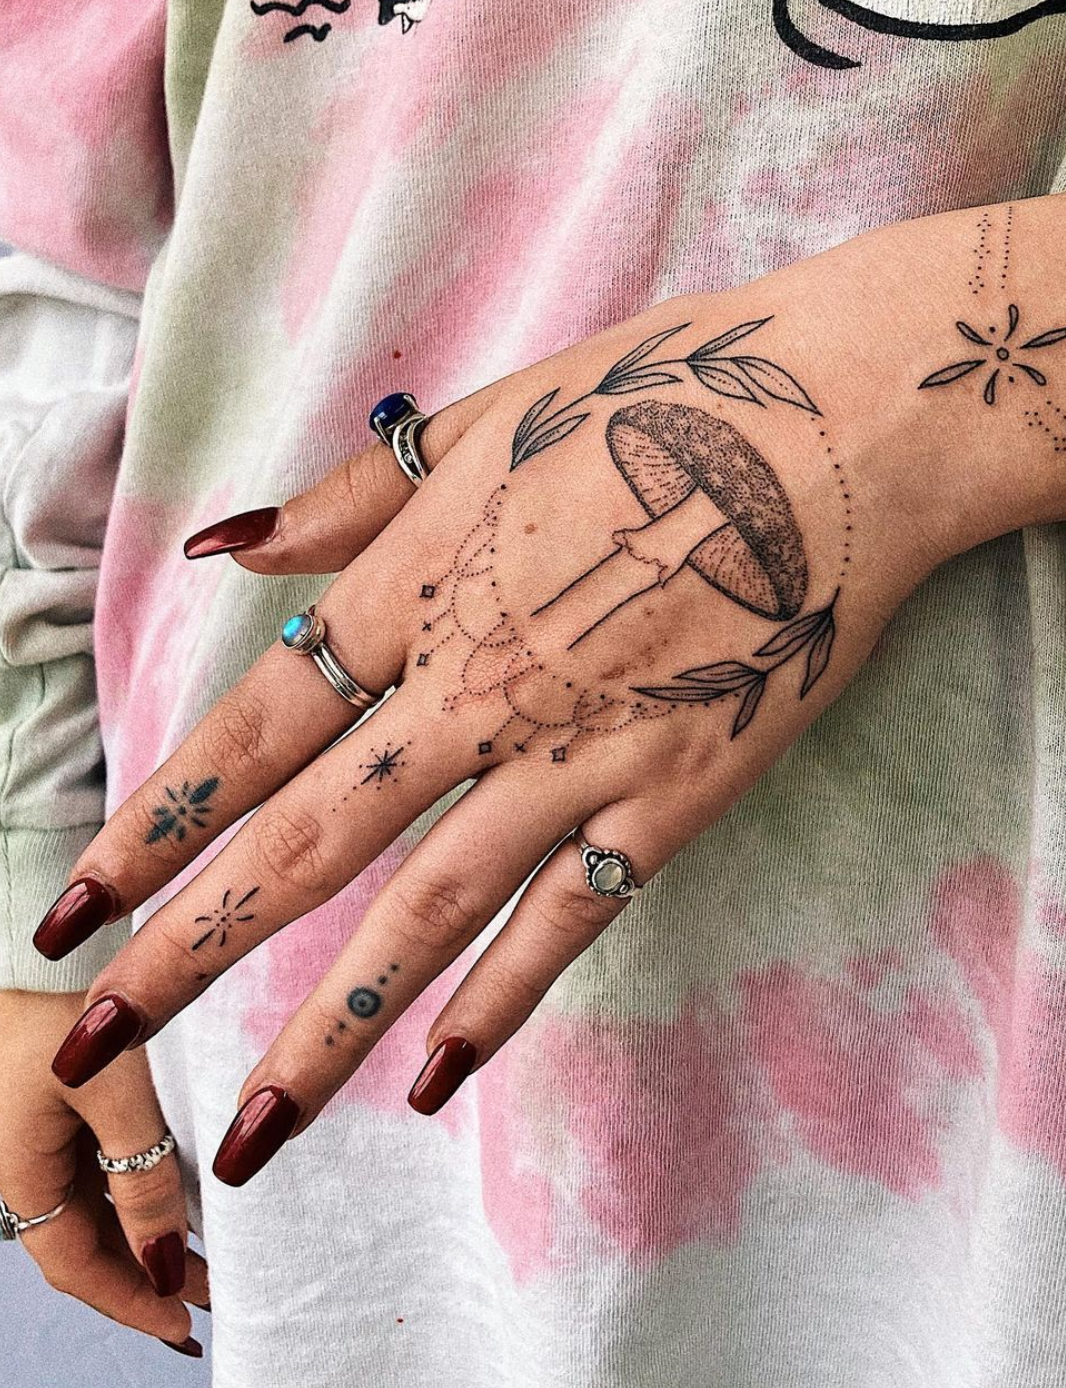 Hand poke tattoo